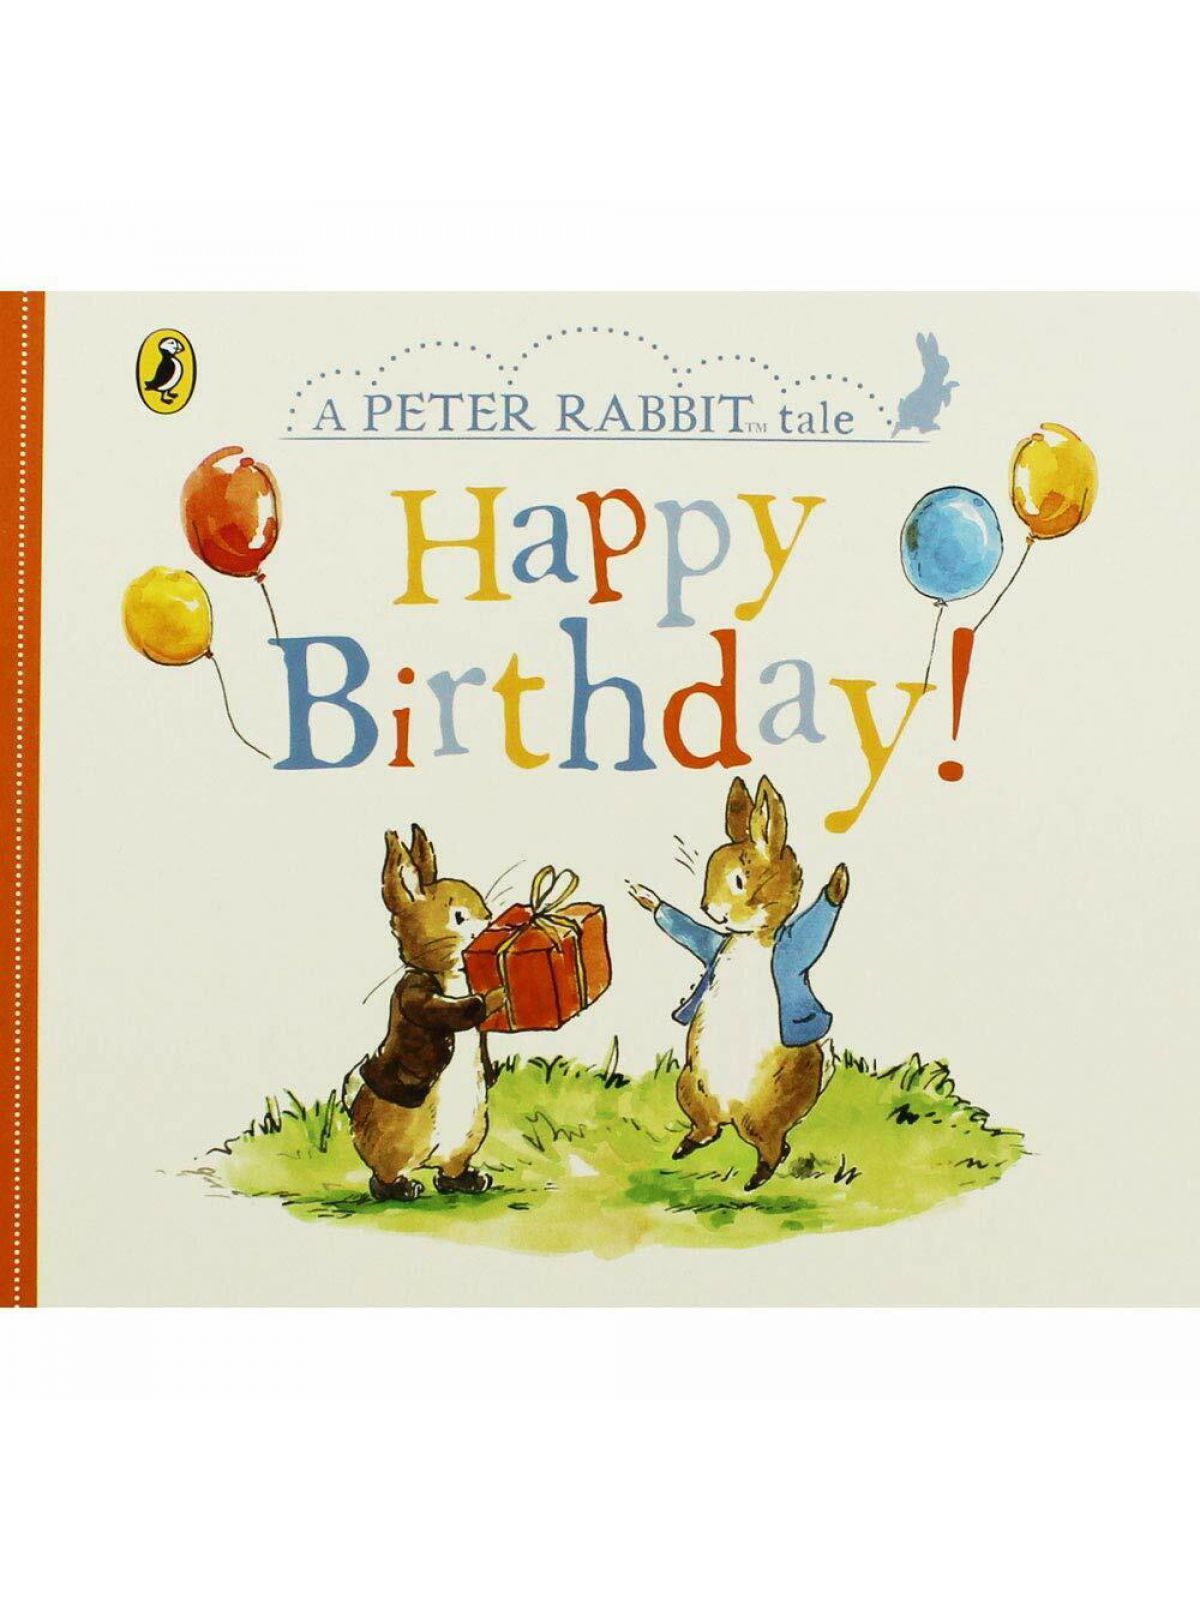 PETER RABBIT TALE: HAPPY BIRTHDAY!  Купить Книгу на Английском